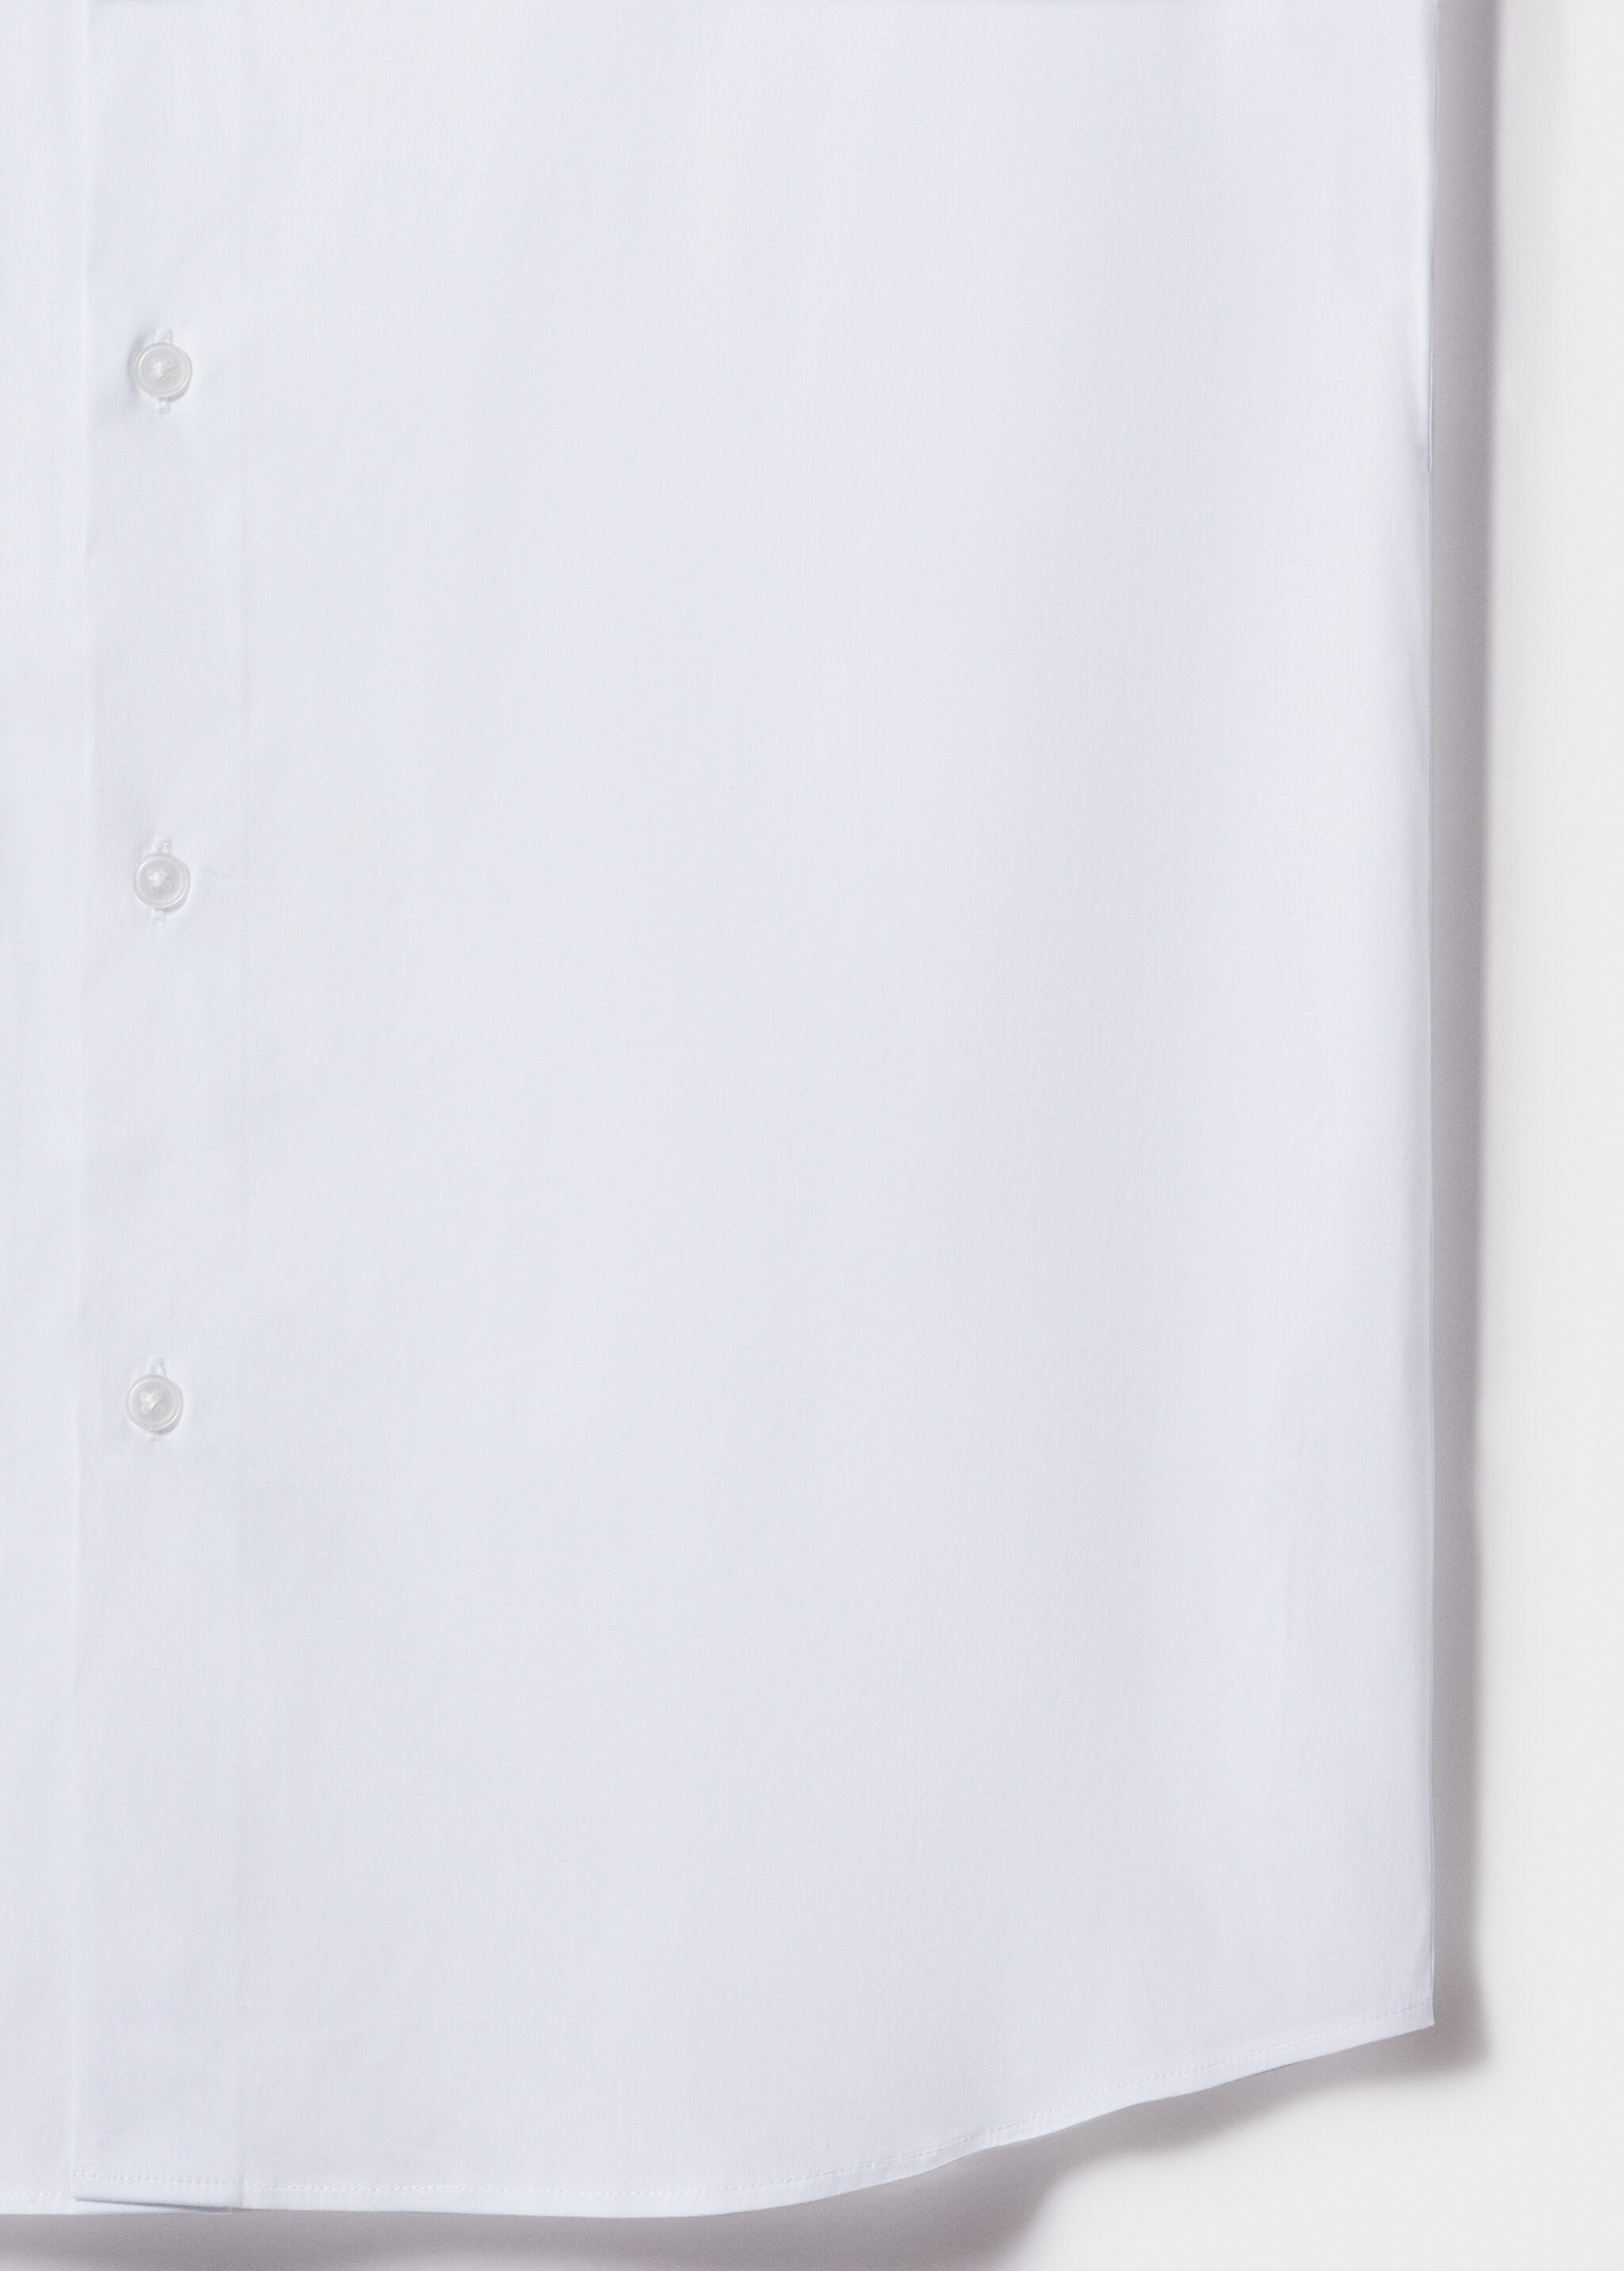 Super slim-fit poplin suit shirt - Detailed view of the waist